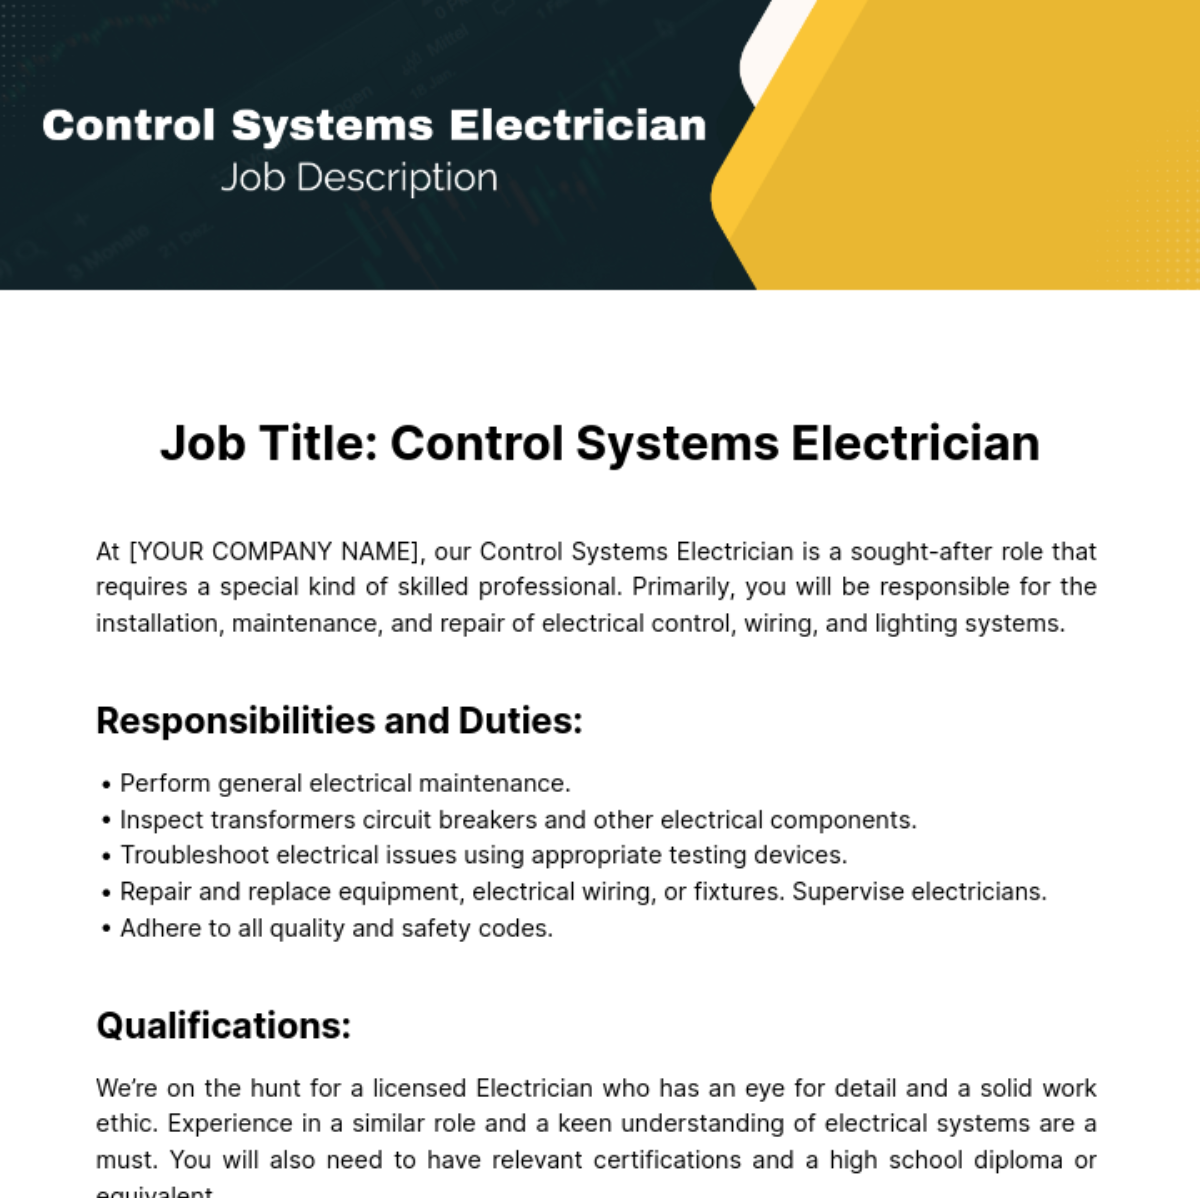 Control Systems Electrician Job Description Template